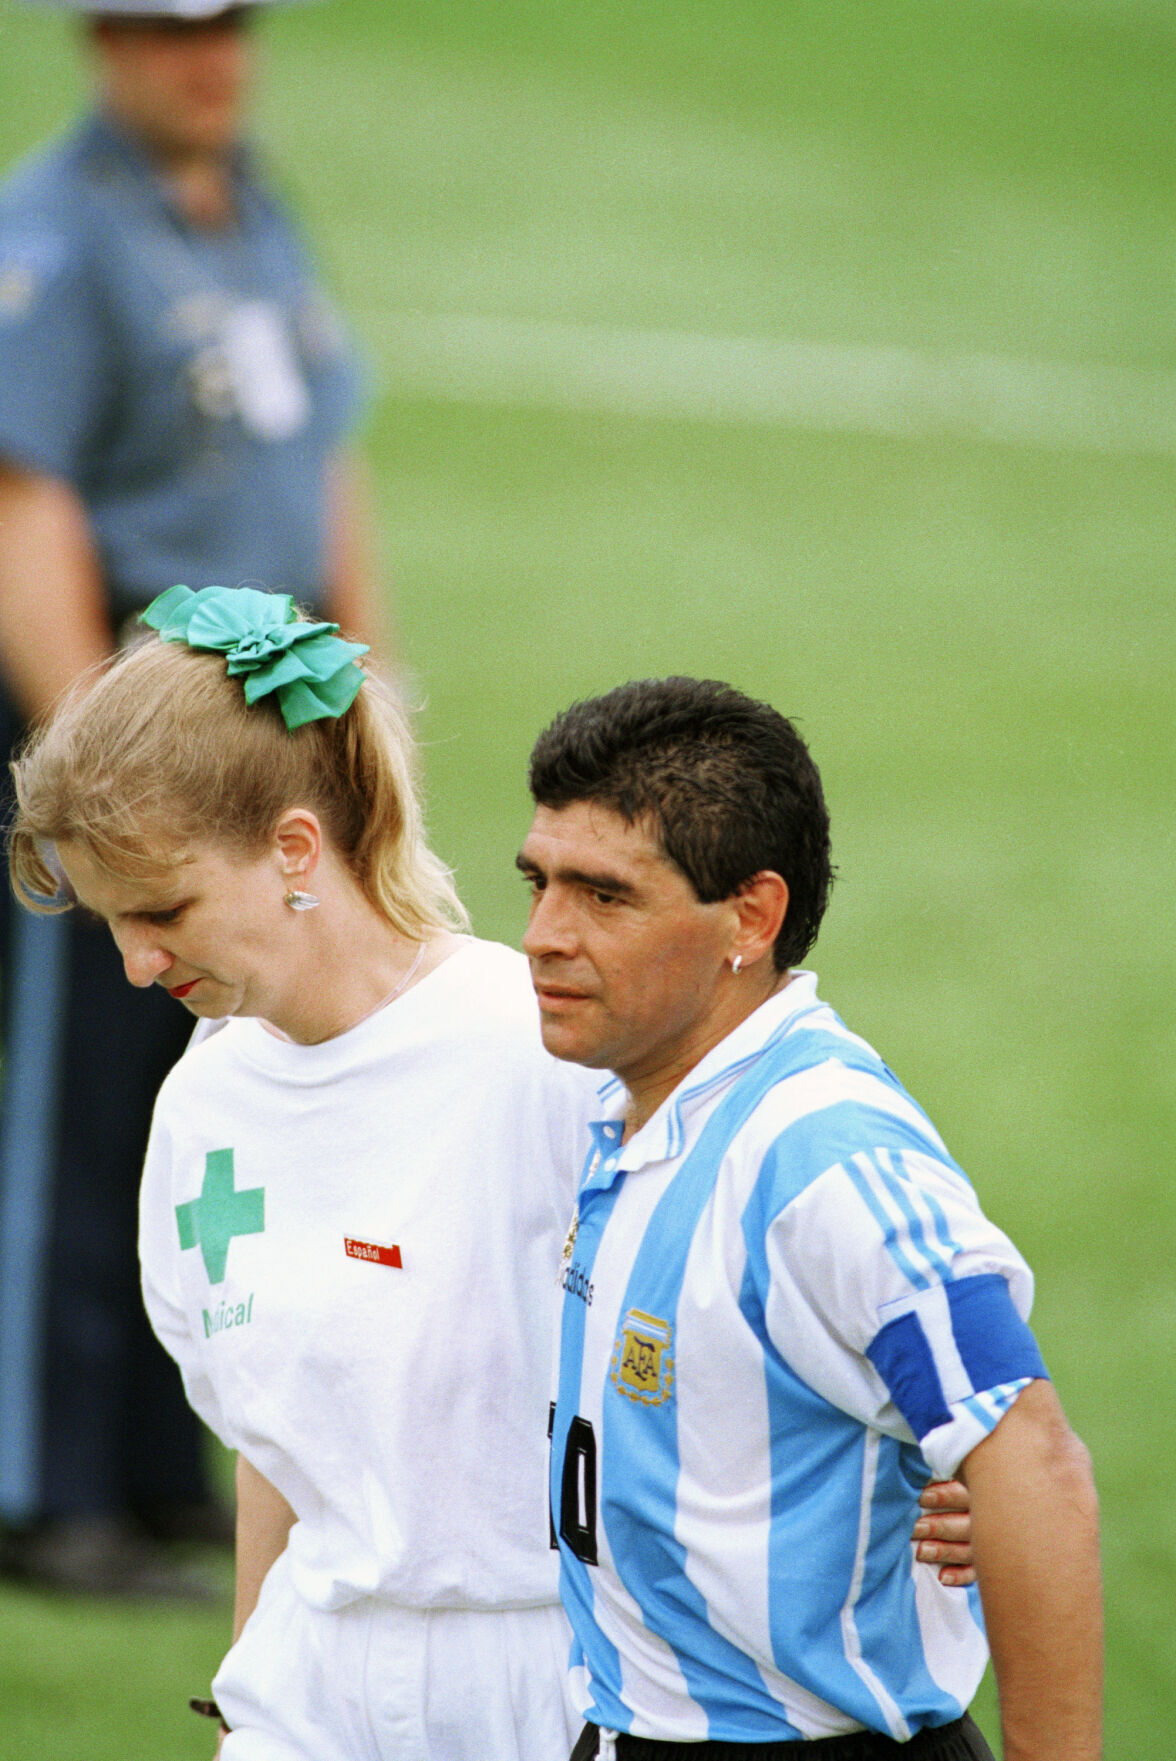 Late soccer legend Diego Maradona 'Hand of God' shirt for sale for  estimated $5.2m